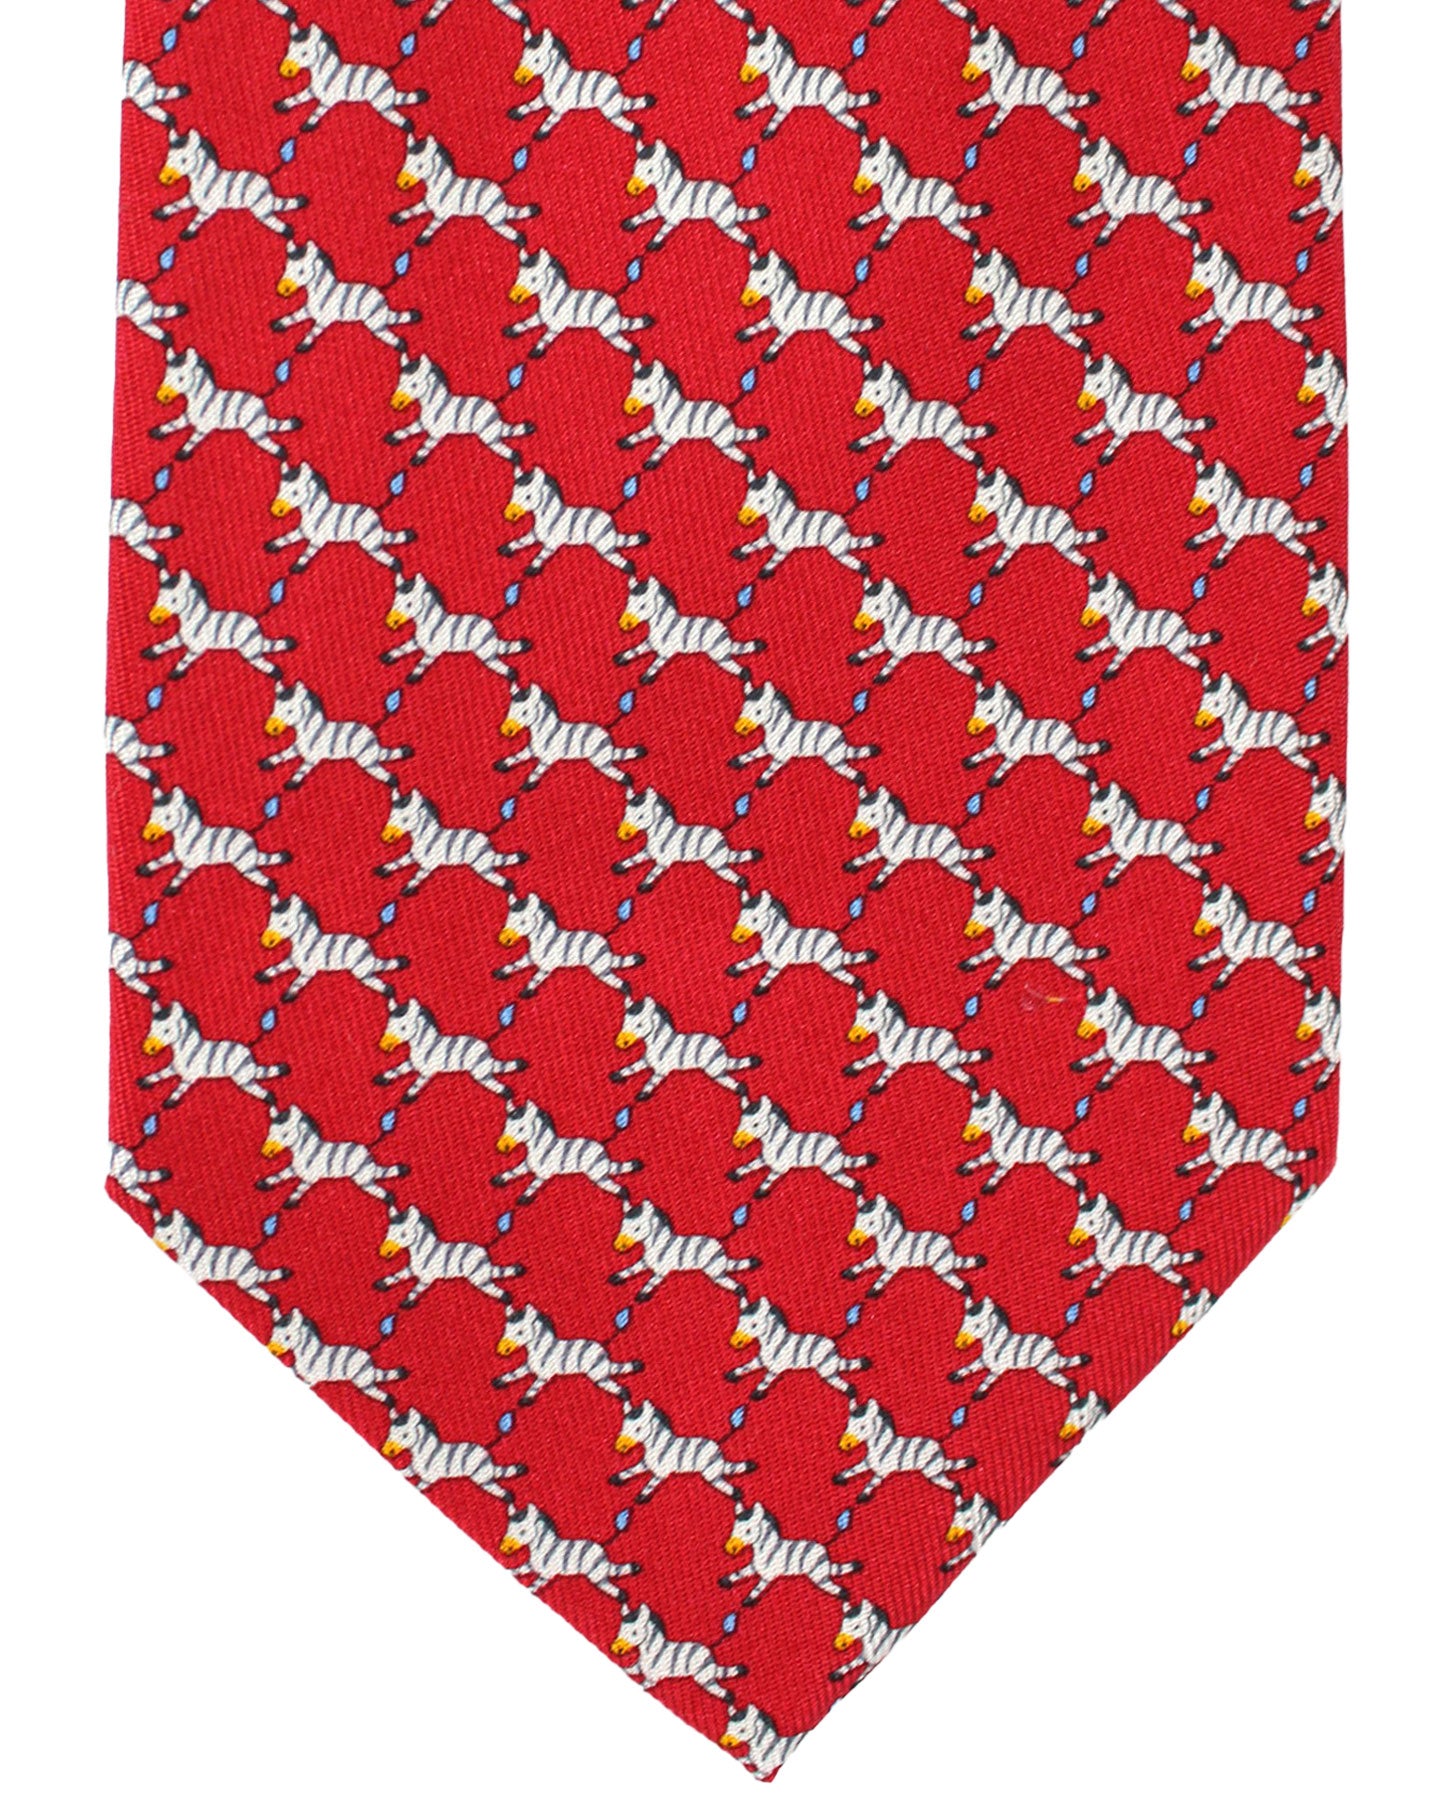 Salvatore Ferragamo Tie Red Novelty Zebra Design